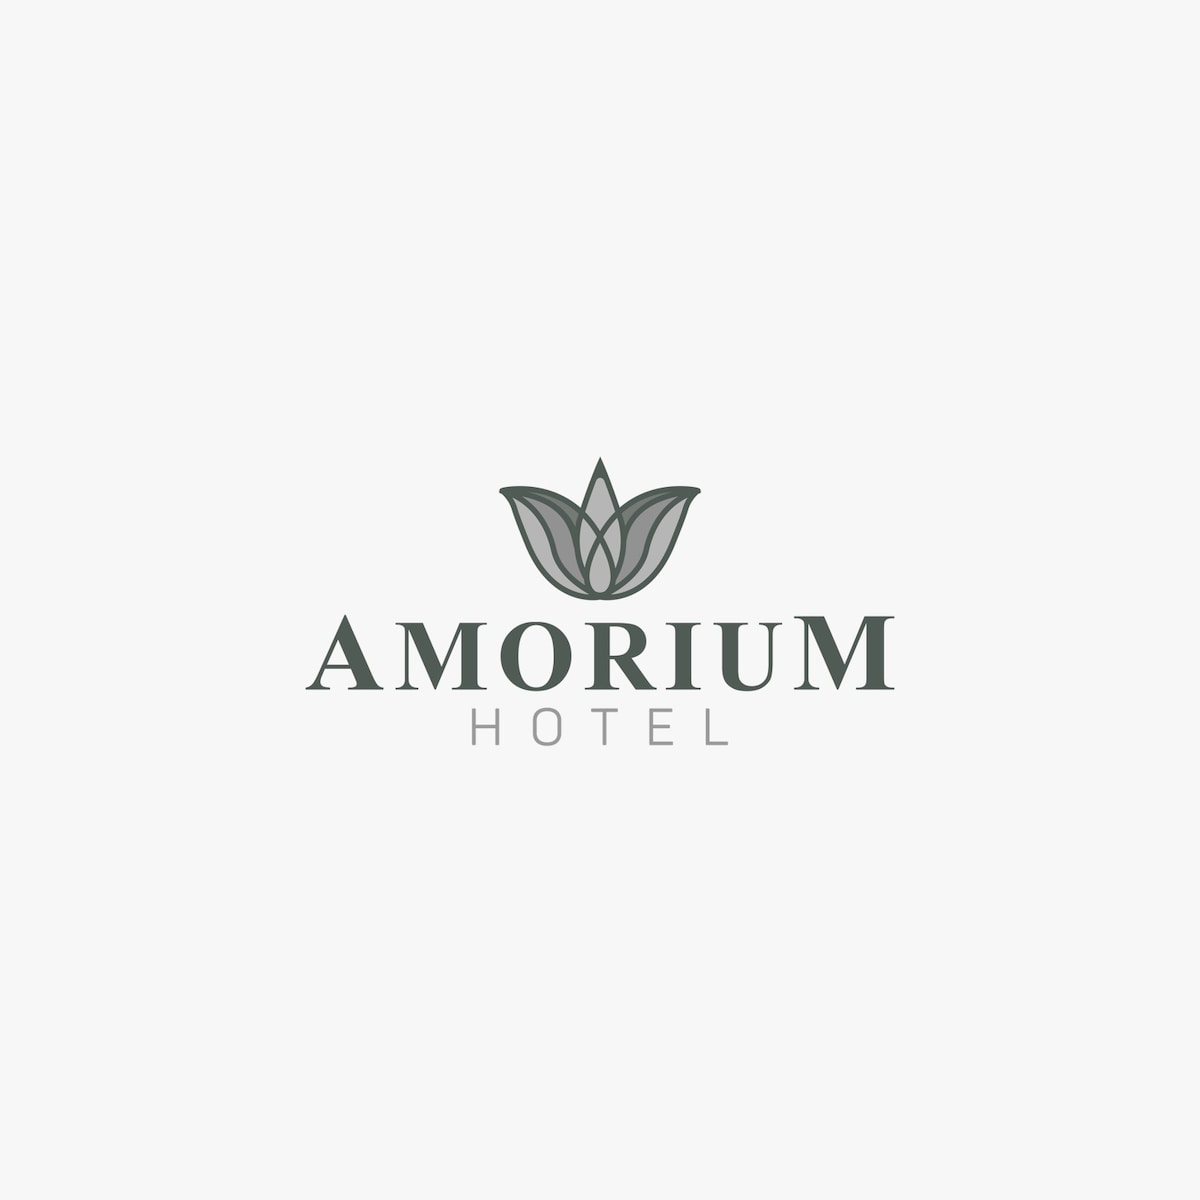 Amorium酒店正等着您